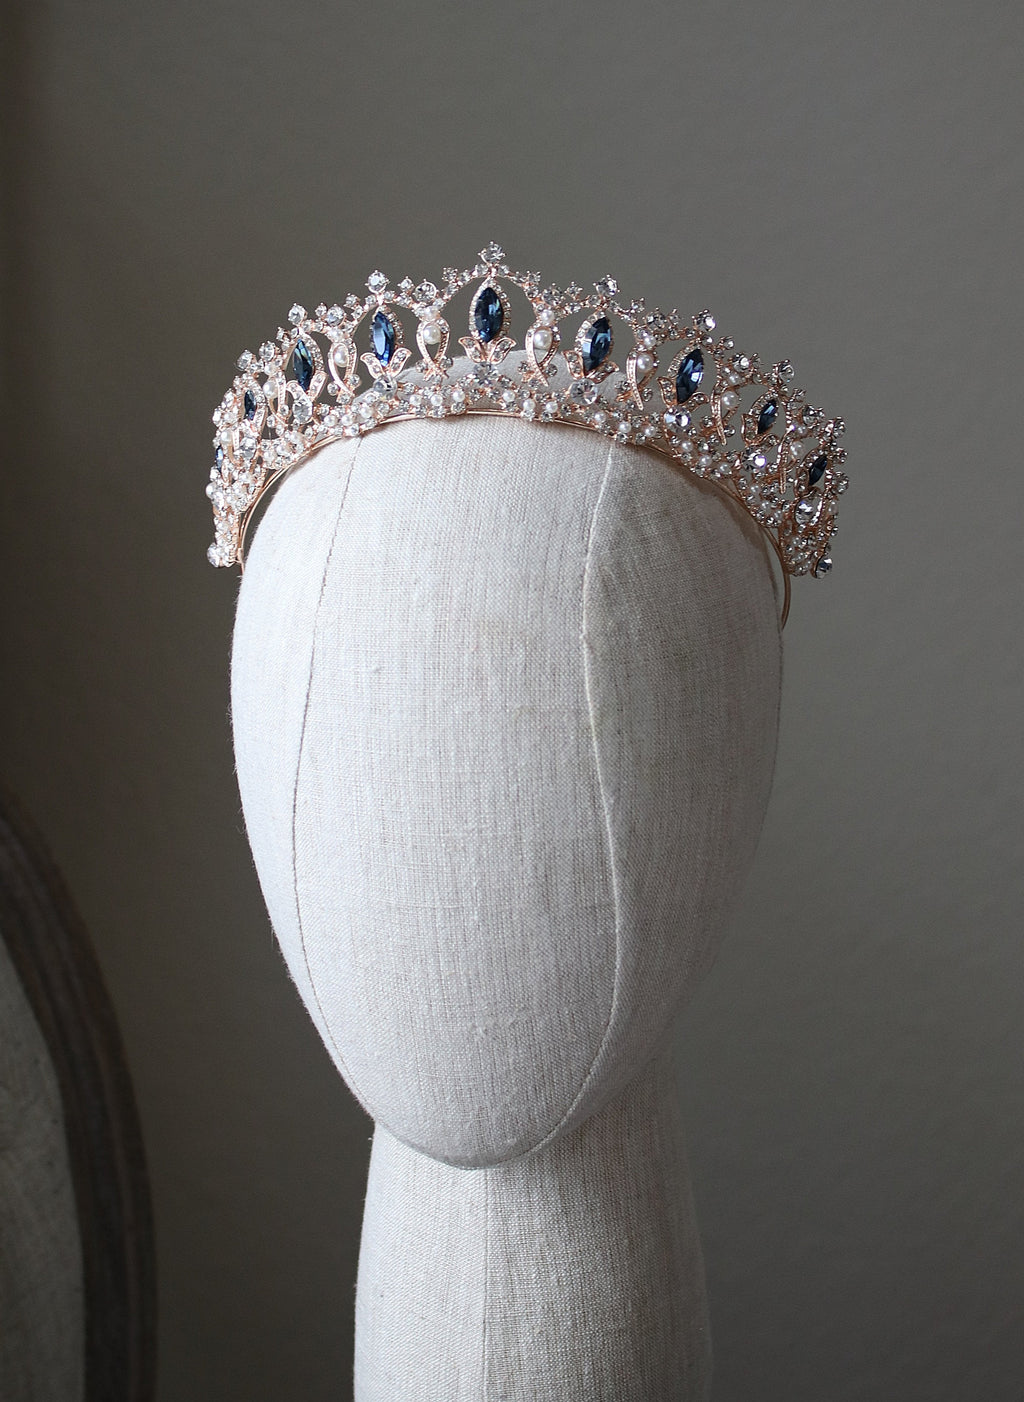 Beautiful Royal Crystal Encrusted Bridal Tiara Crown Silver